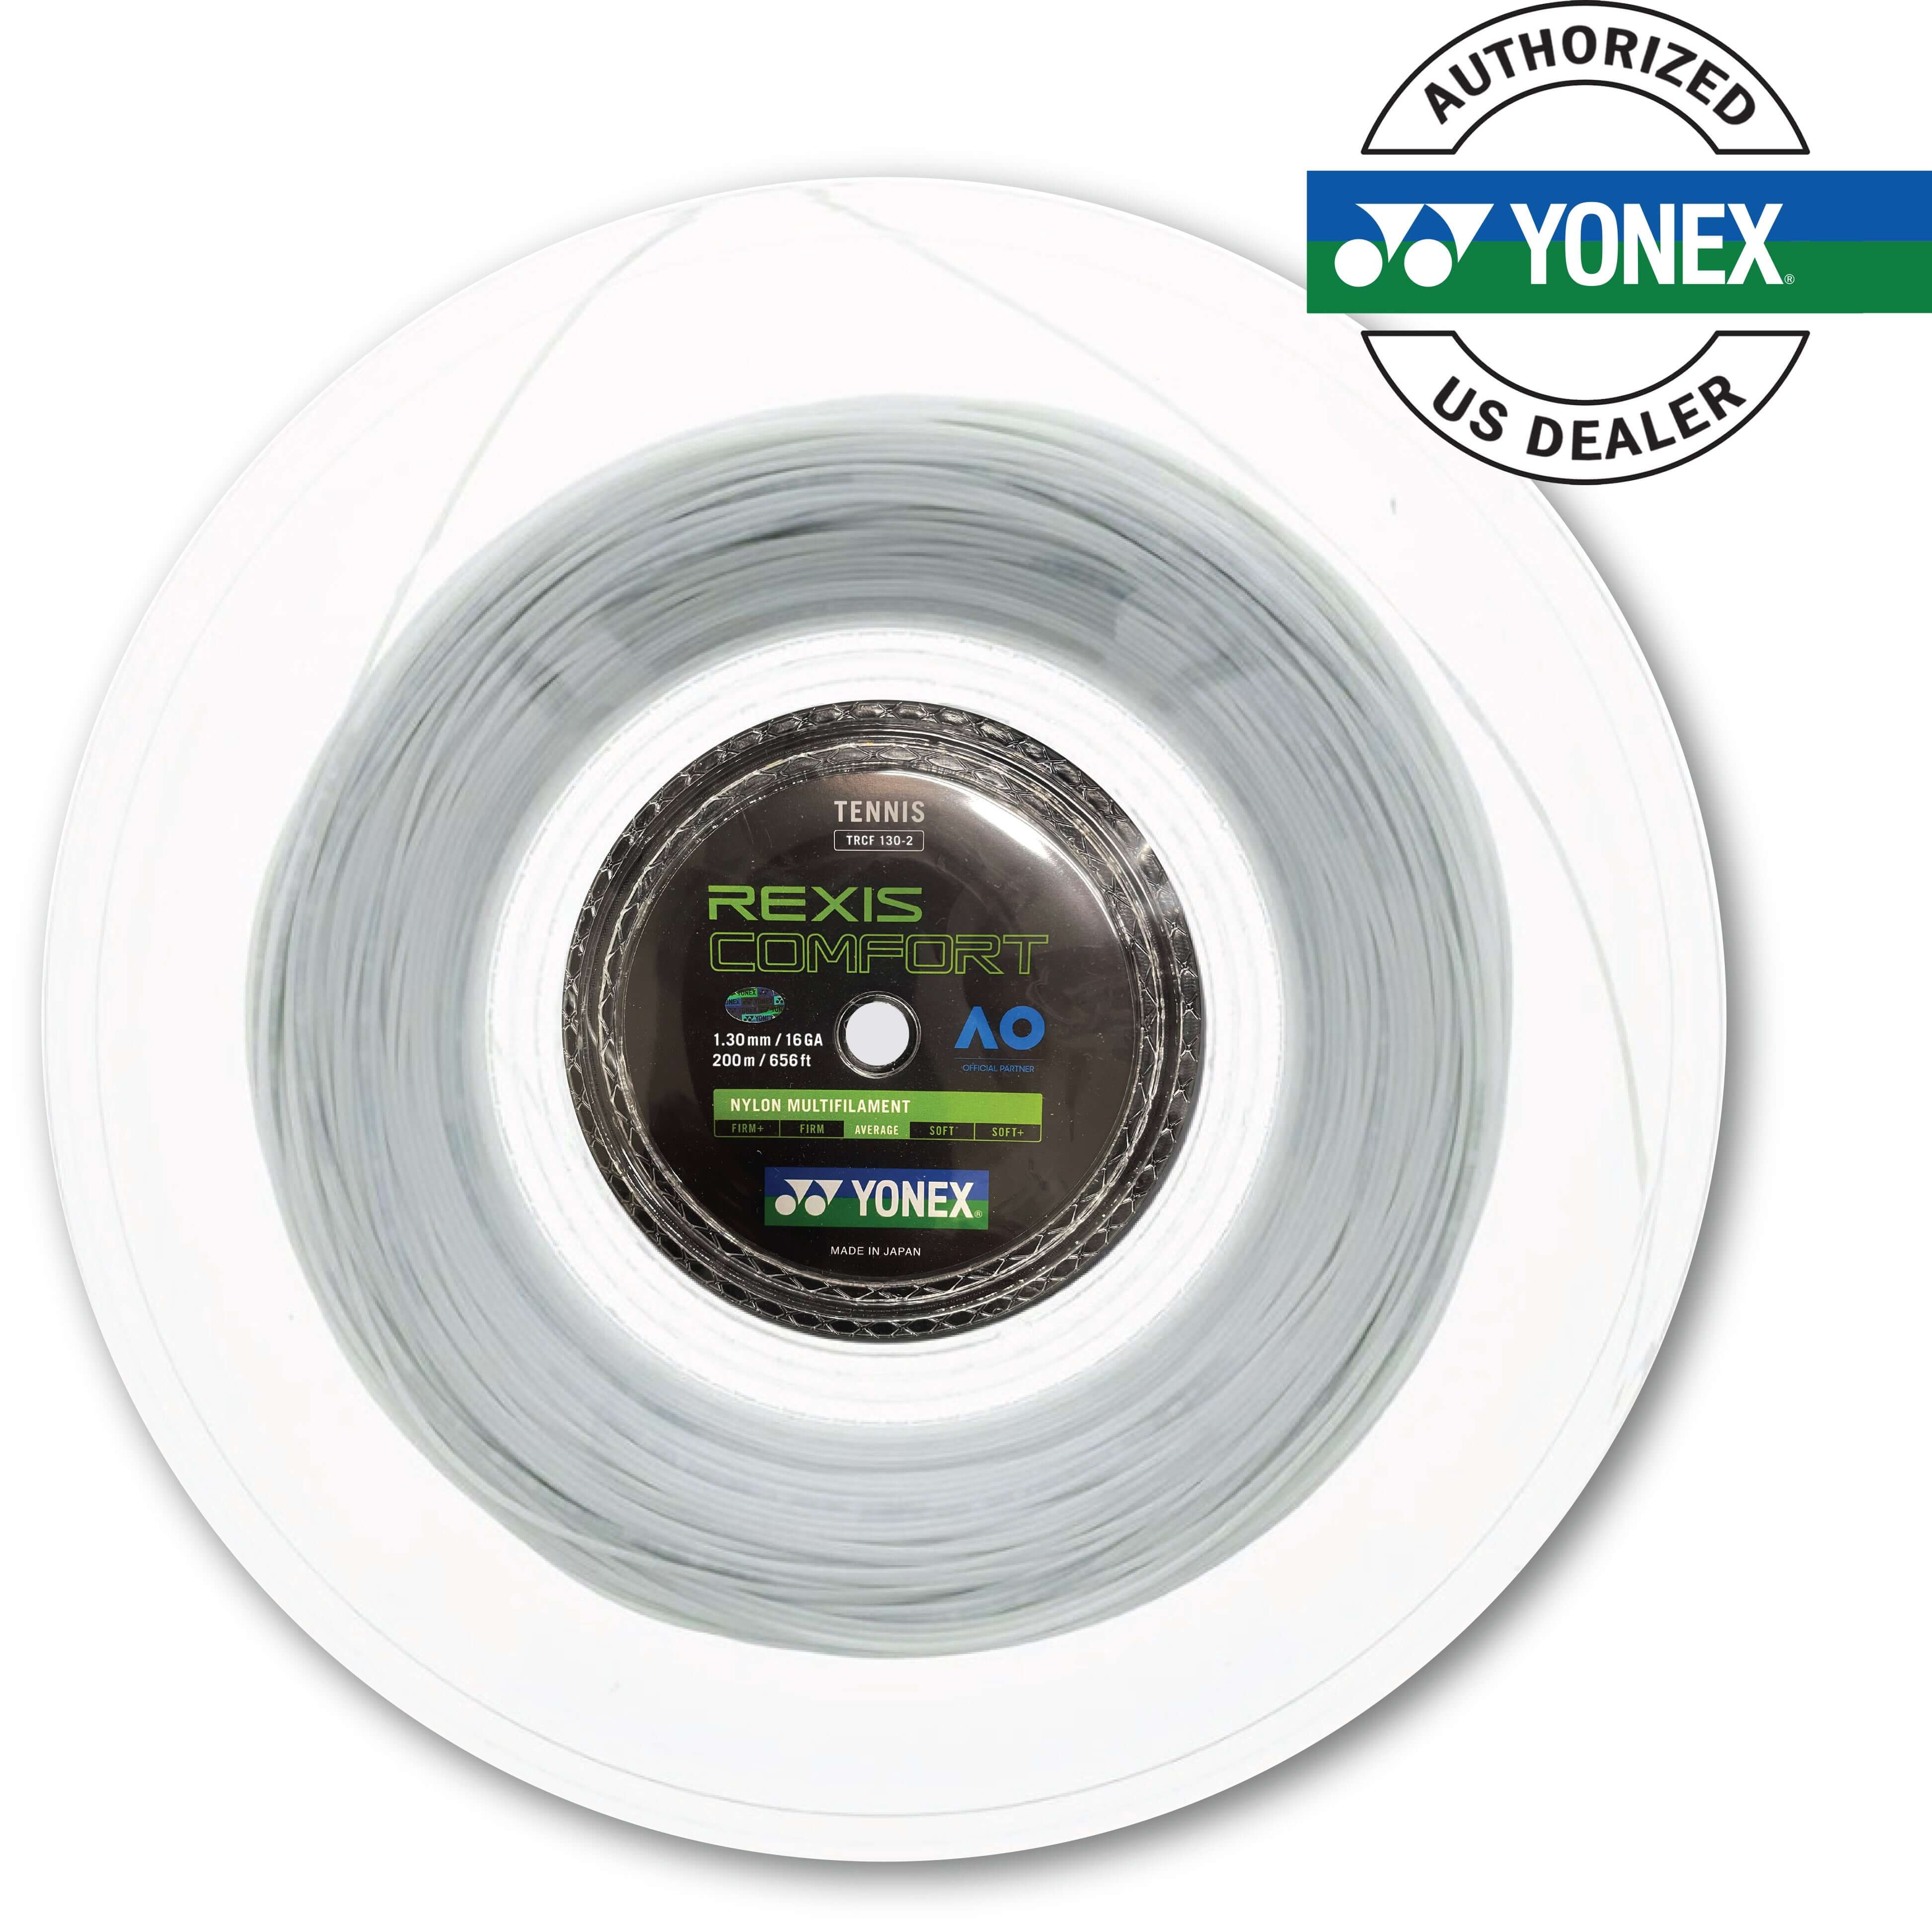 Yonex Rexis Comfort 130 / 16  200m Tennis String Reel (Cool White)